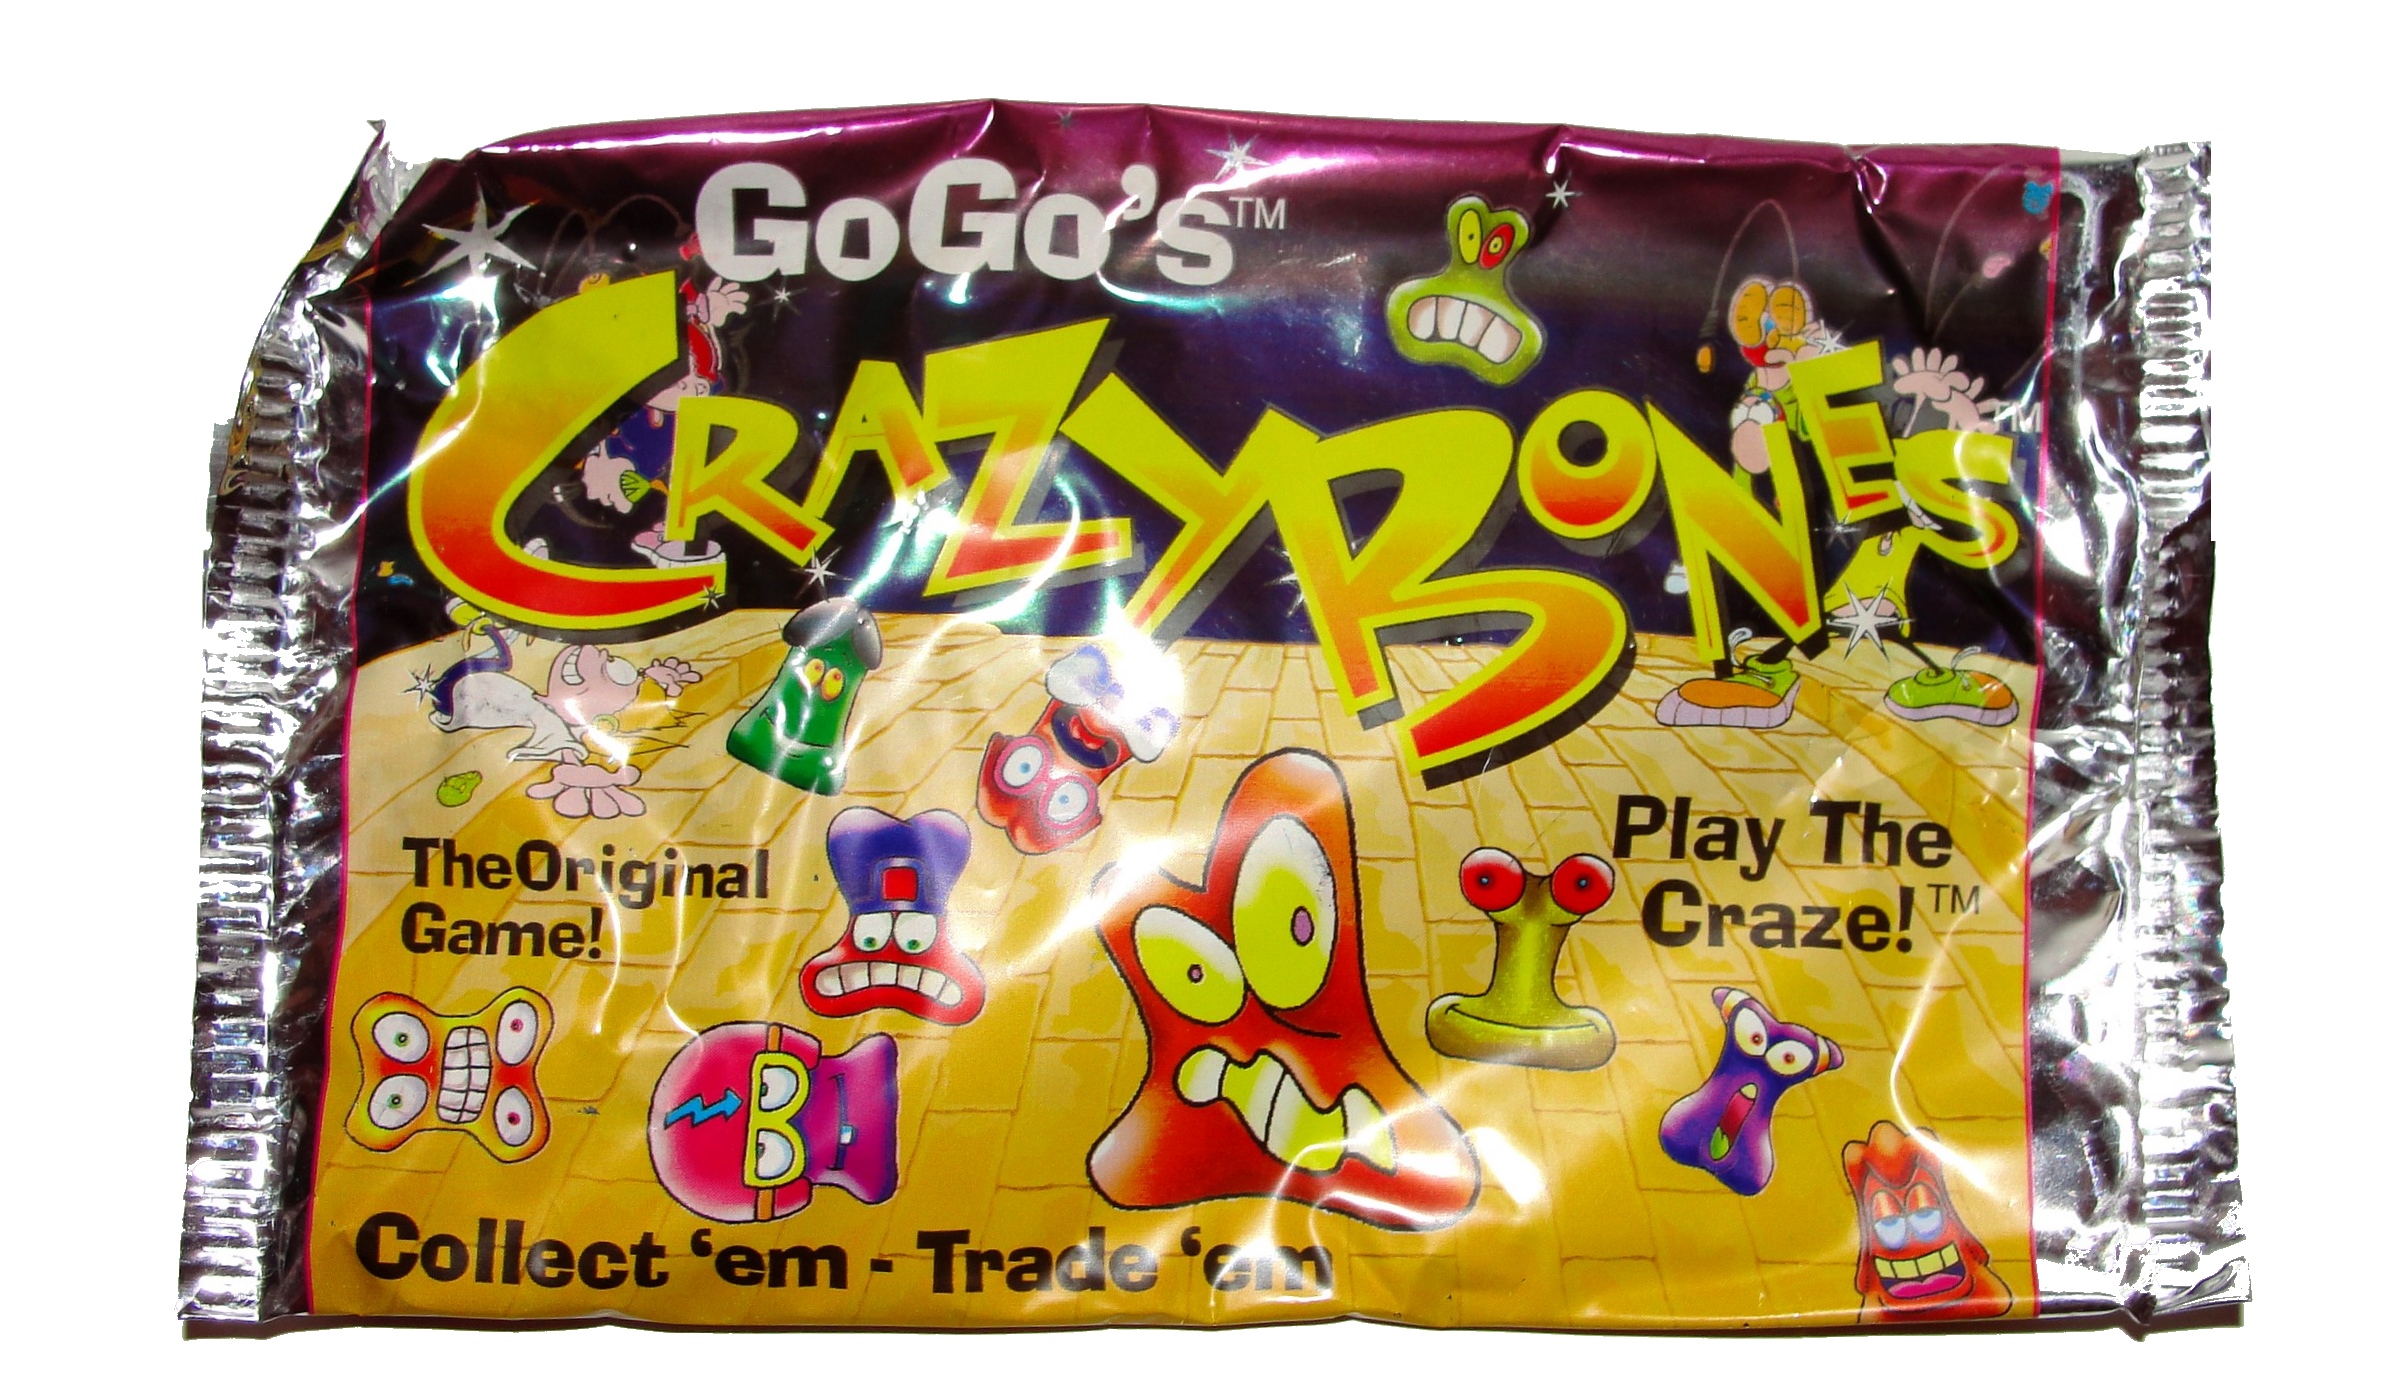 Gogos Gogos Crazy Bones FULL SET complete classic original retro 90s collection Eggy 2 